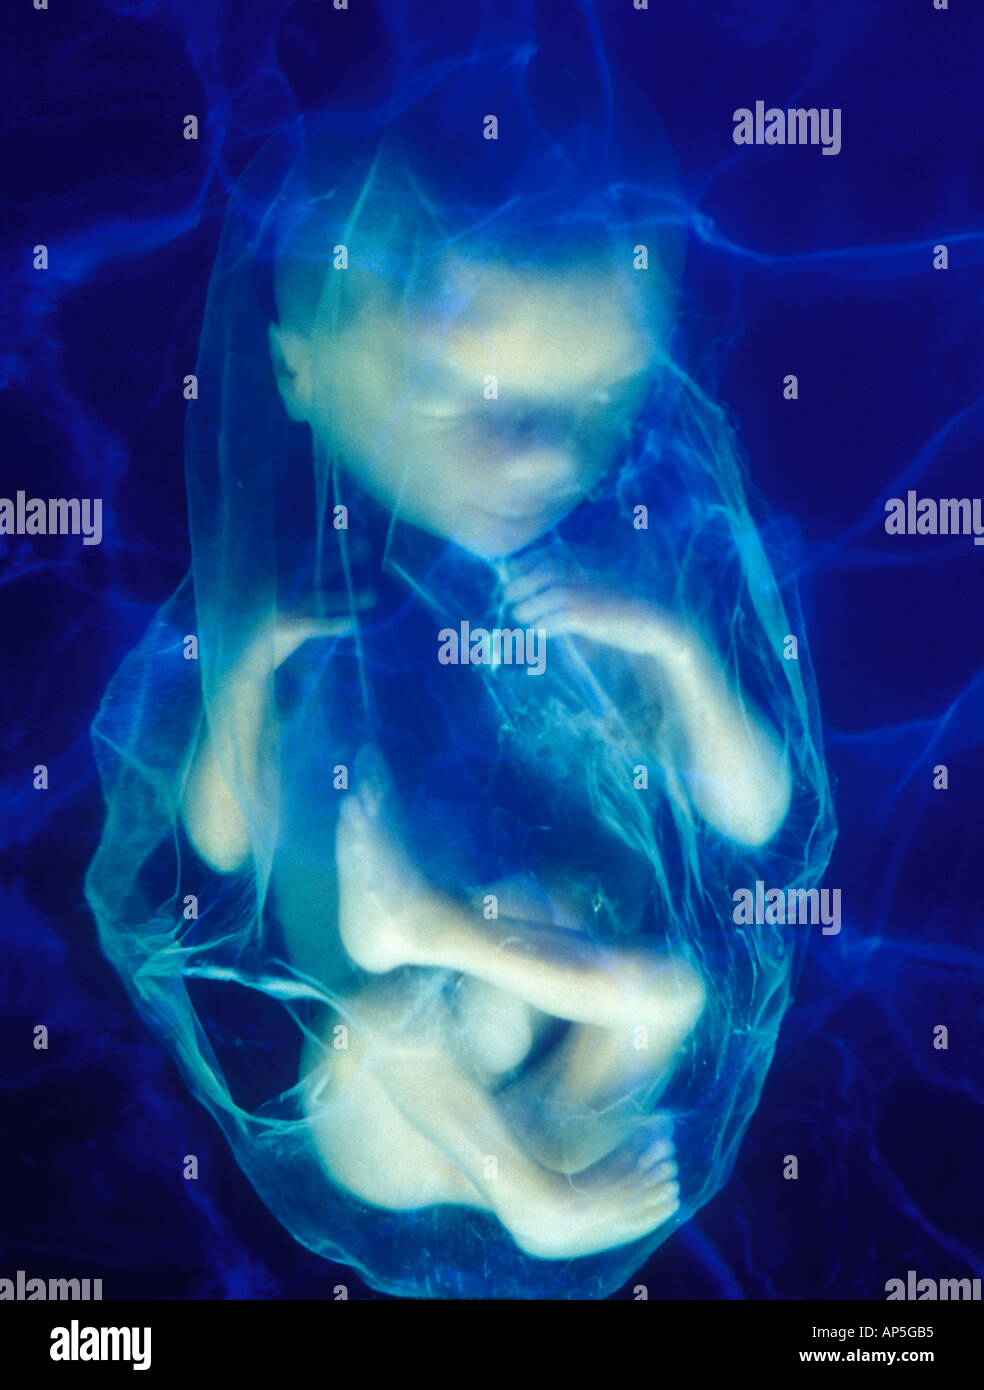 human fetus in amniotic fluid Stock Photo